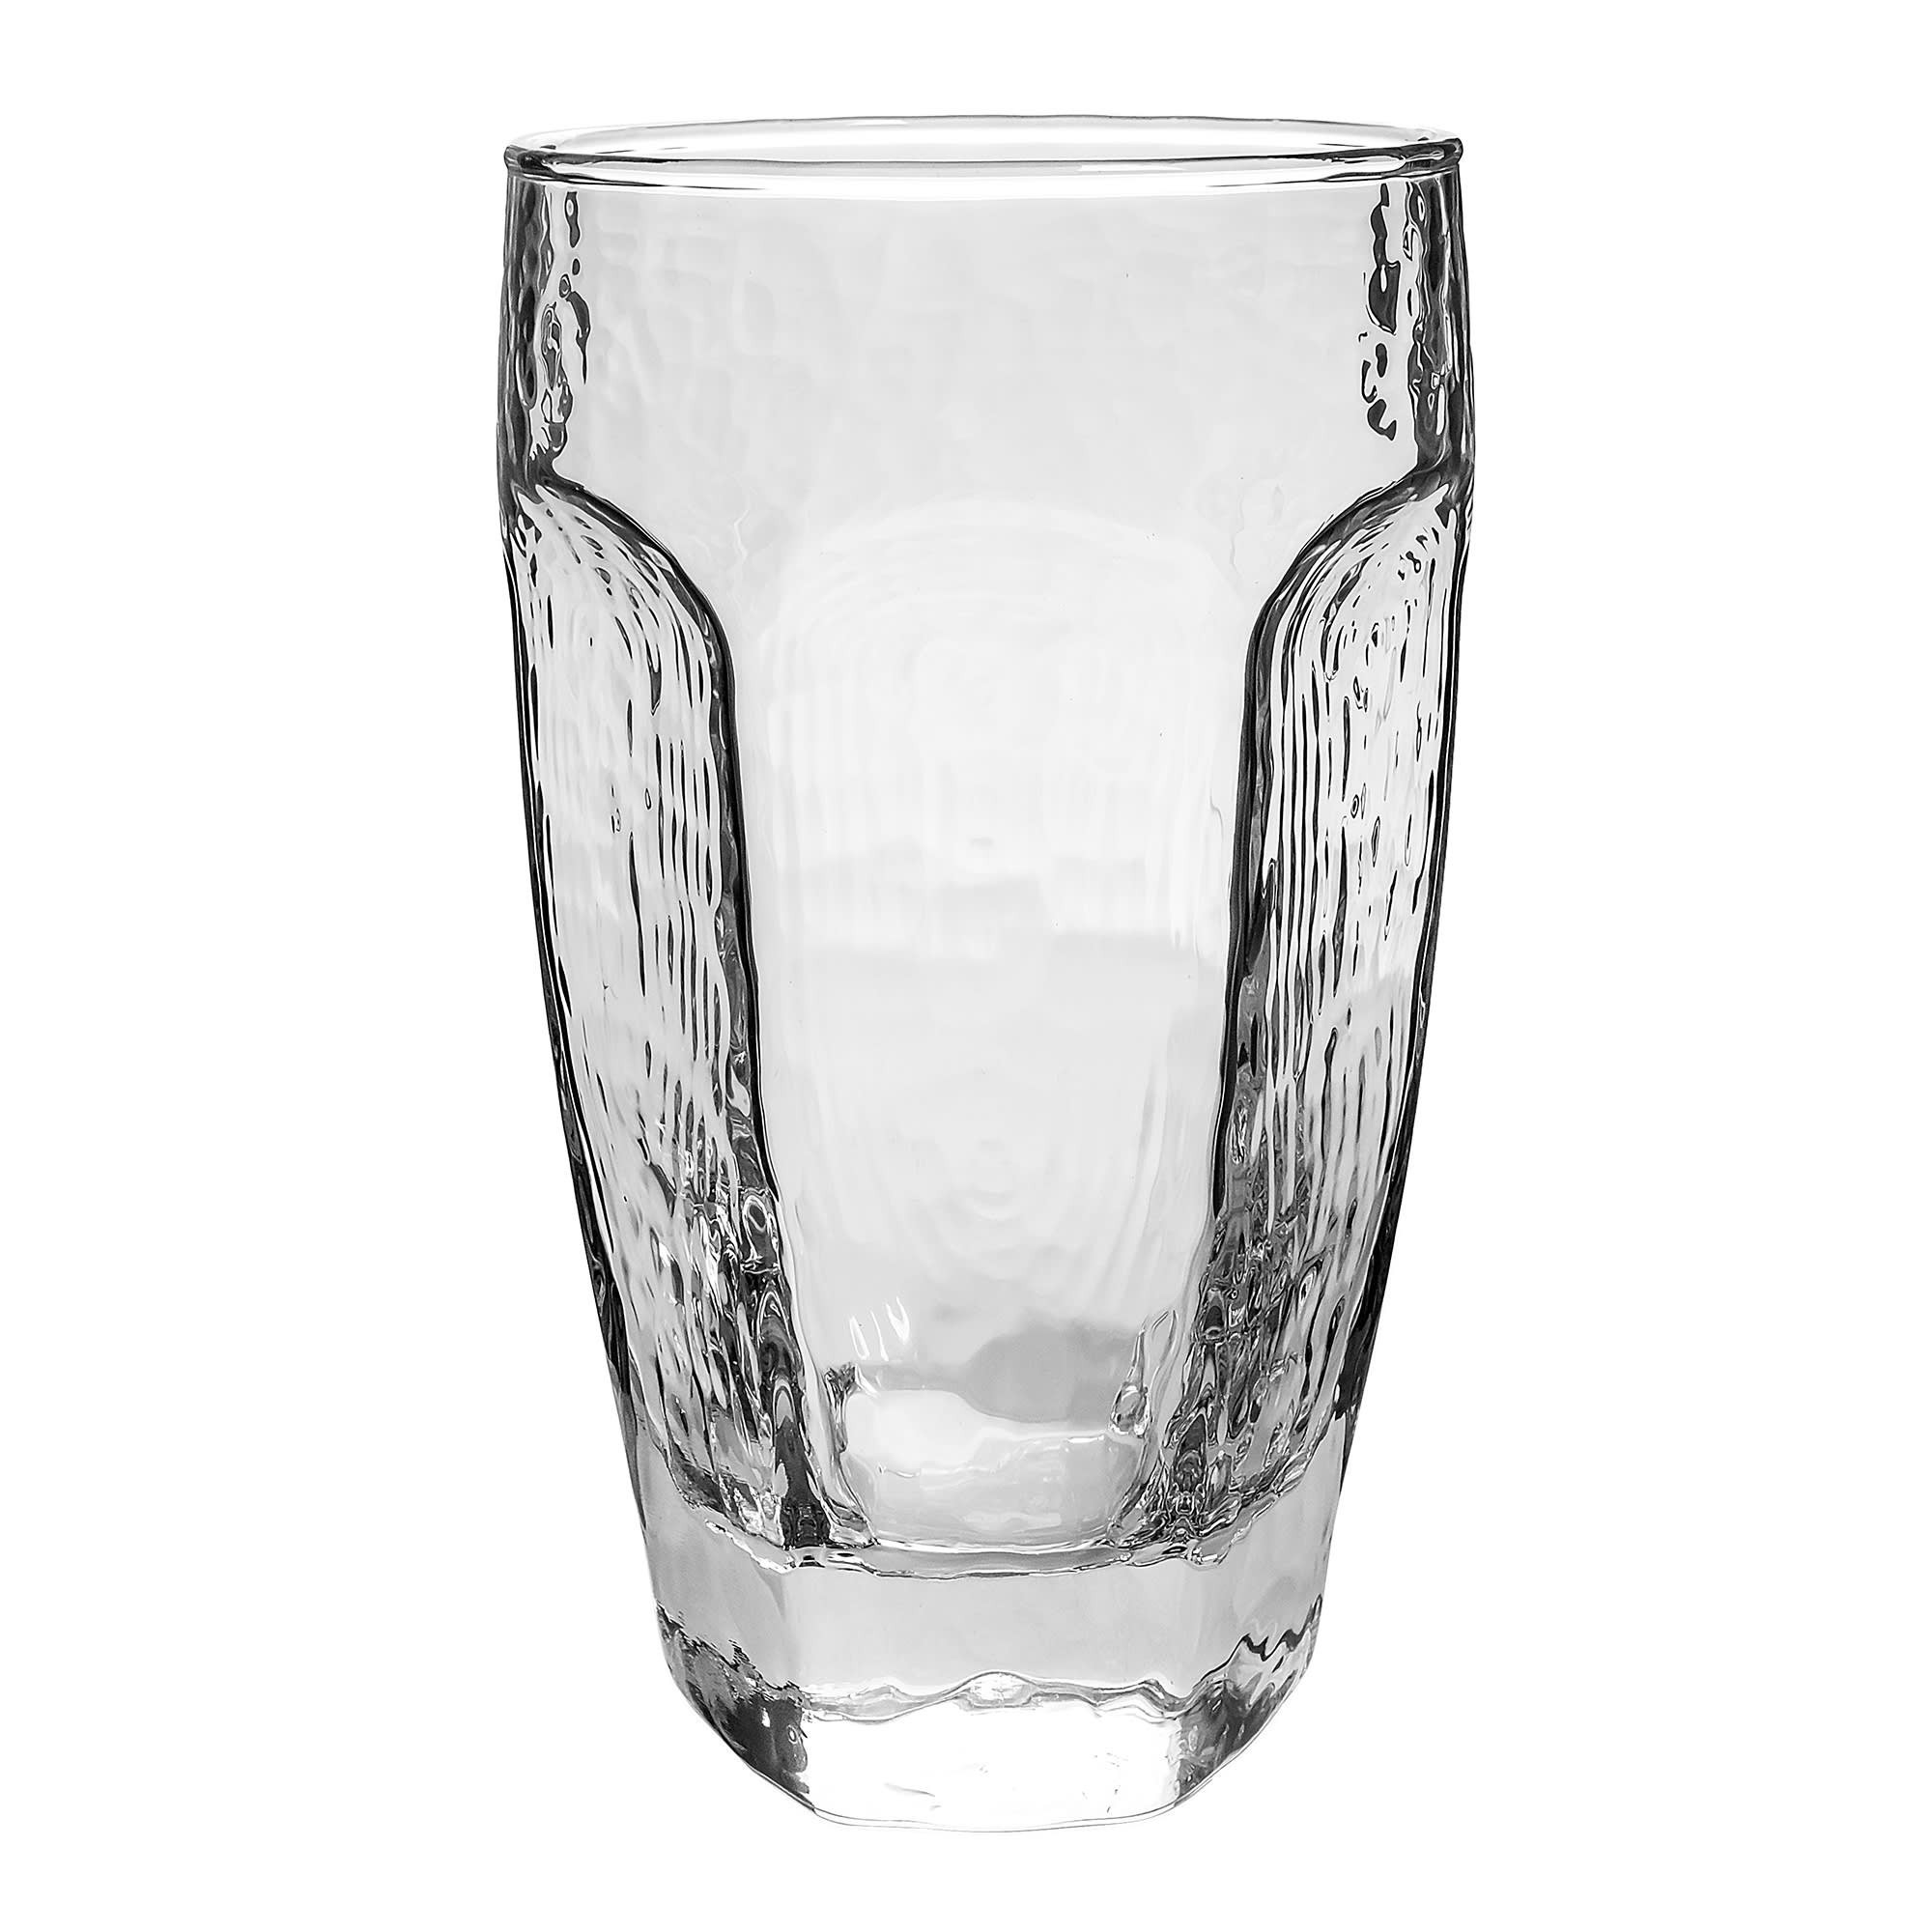 Libbey 2488 12 oz Chivalry Beverage Glass - Safedge Rim Guarantee